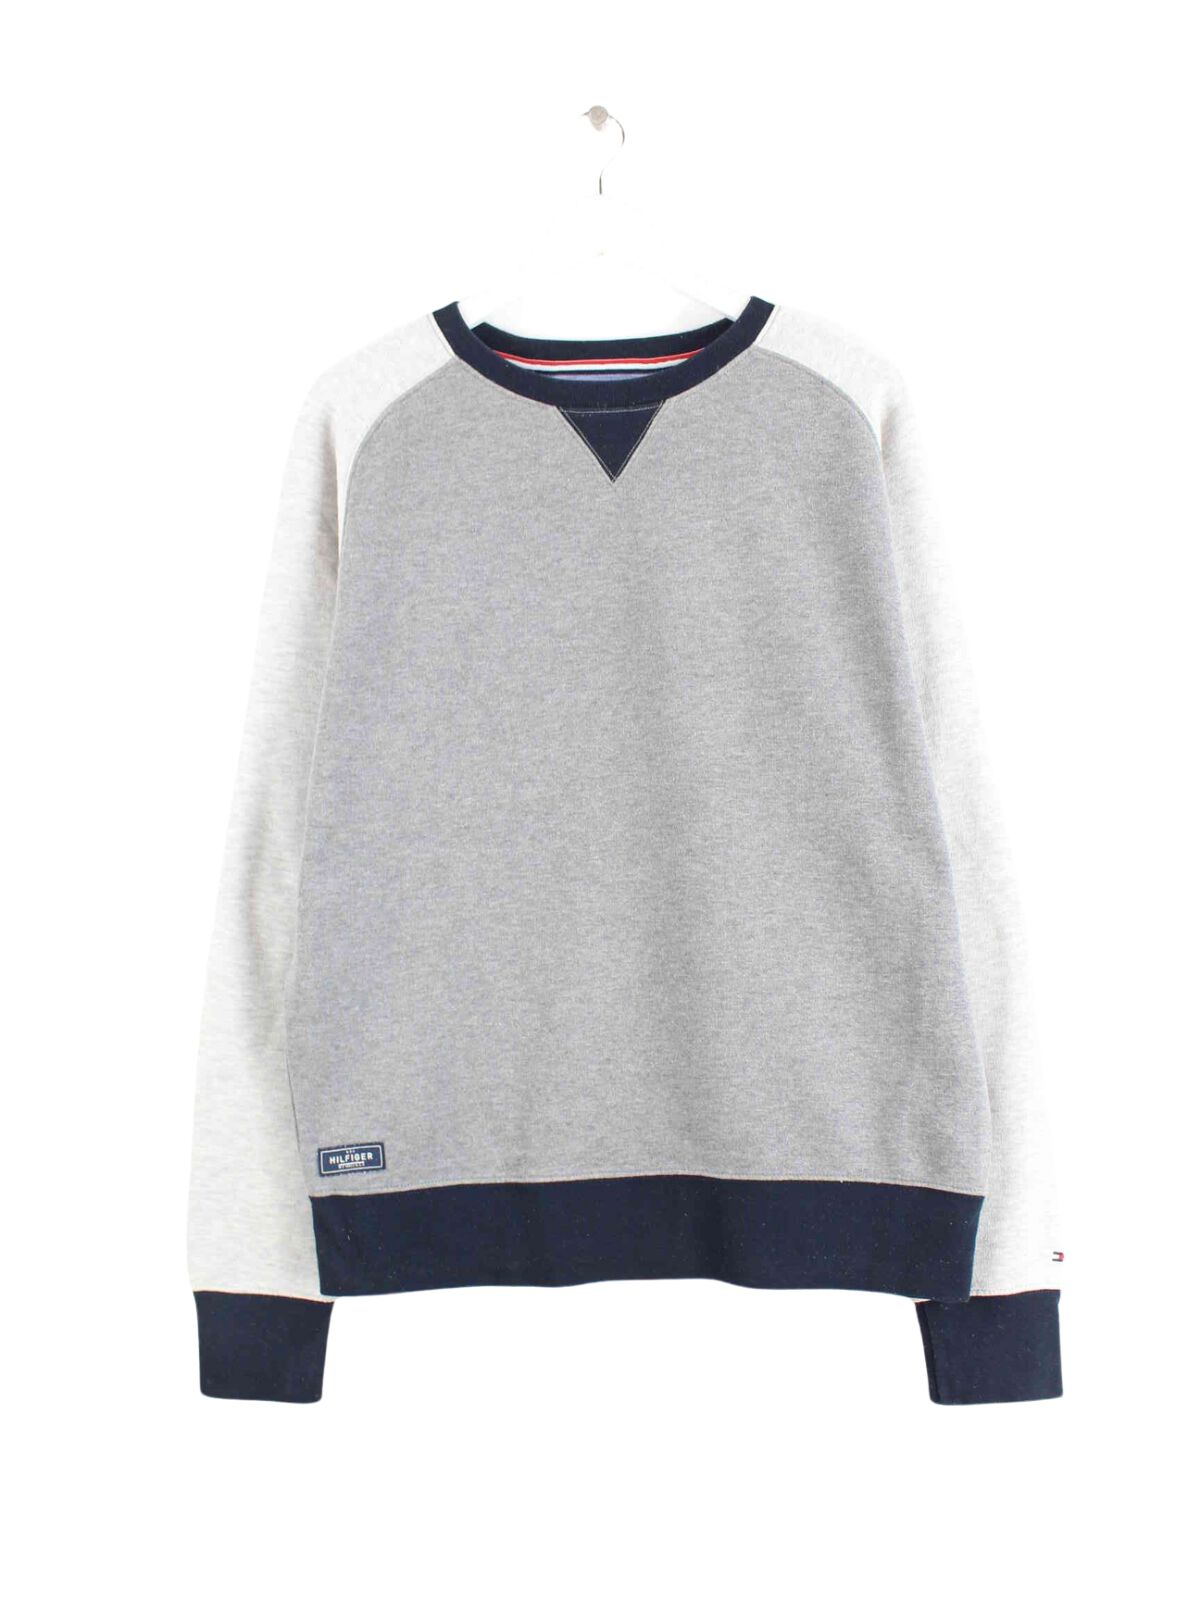 Tommy Hilfiger Basic Sweater Grau L (front image)